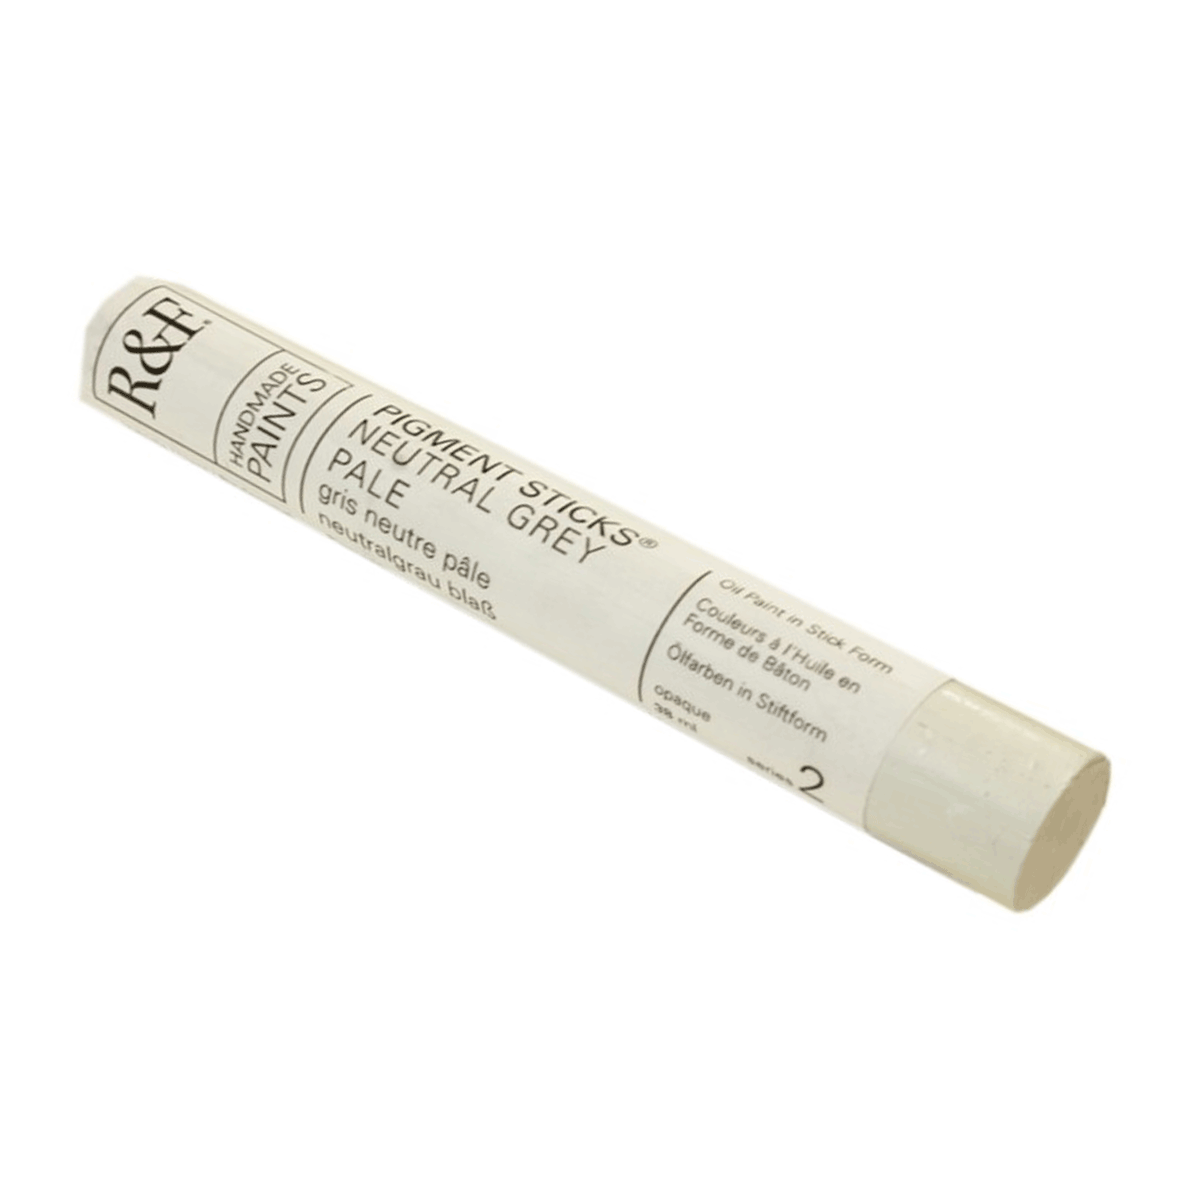 R&F Oil Pigment Stick, Neutral Grey Pale 38ml